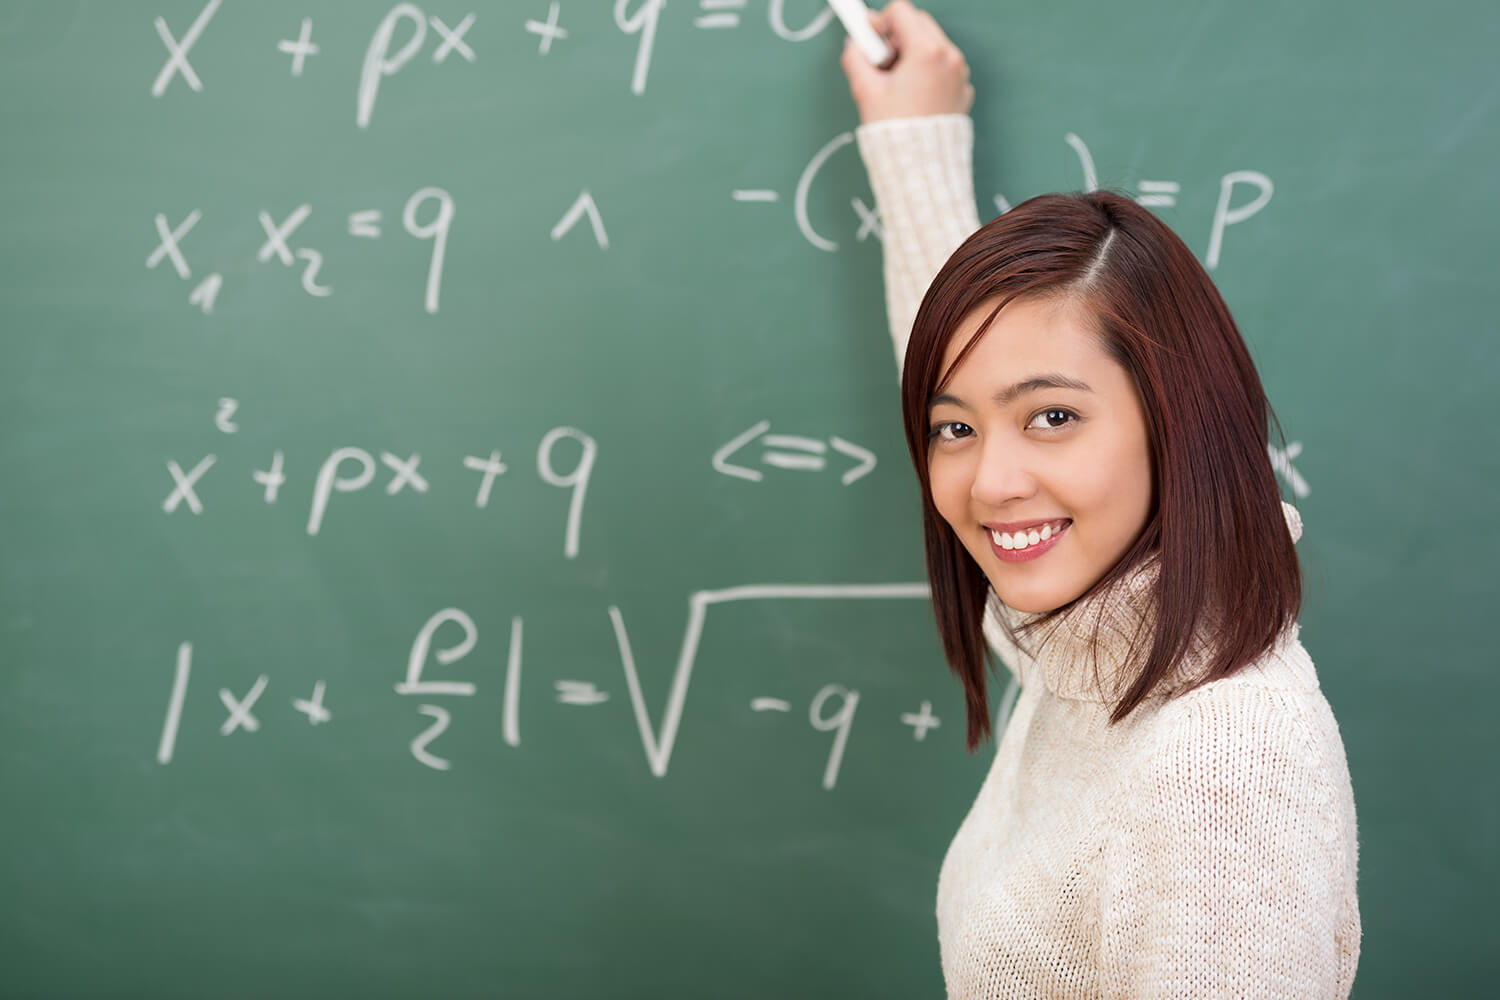 singaporean female student doing math on a blackboard